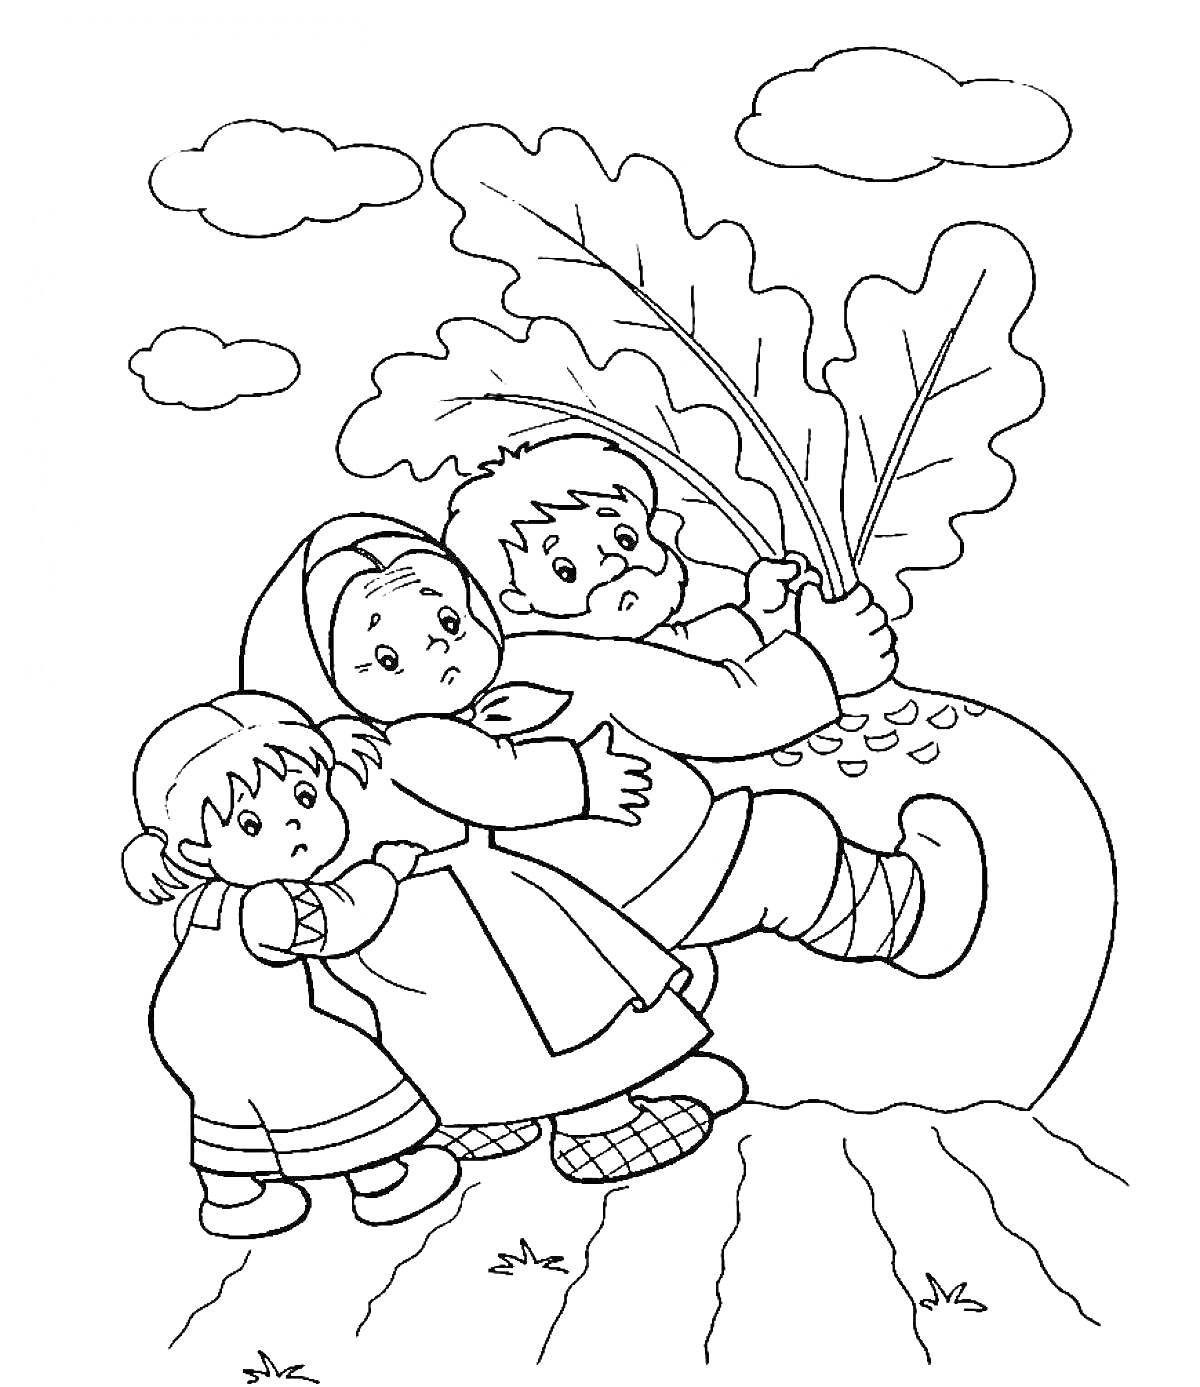 Дедка, бабка и внучка тянут репку